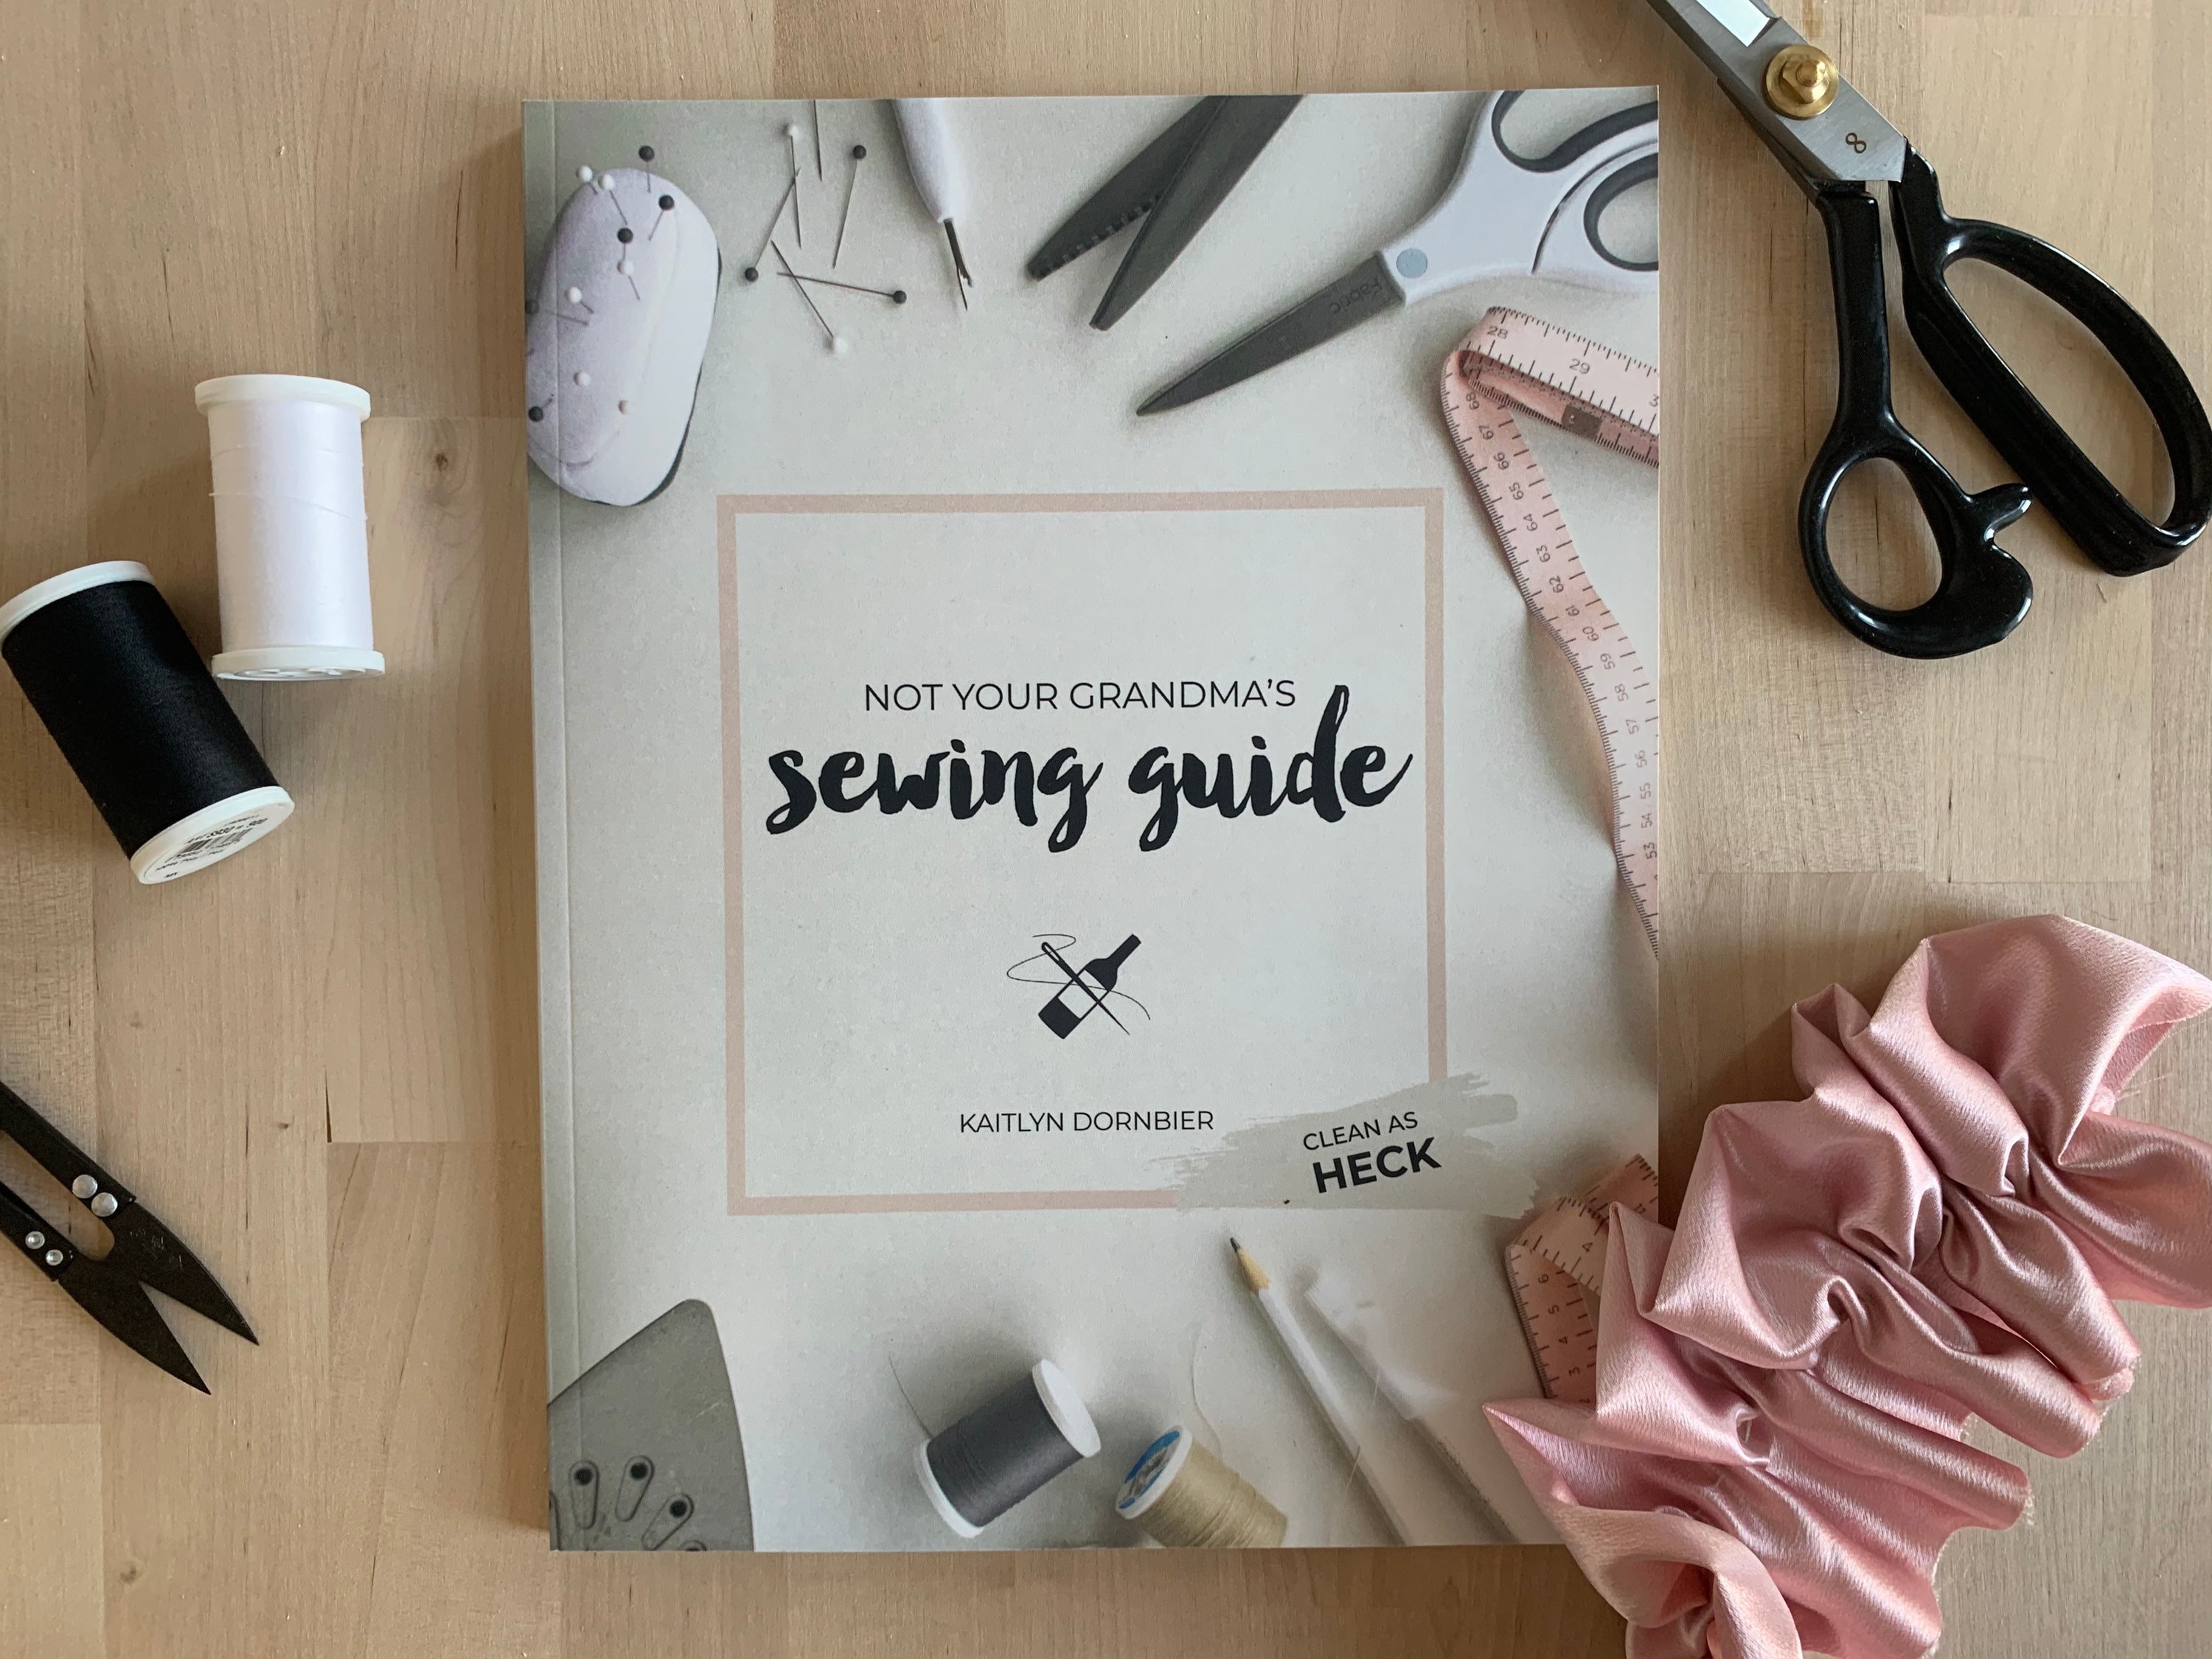 Not Your Grandma's Sewing Guide by Kaitlyn Dornbier 